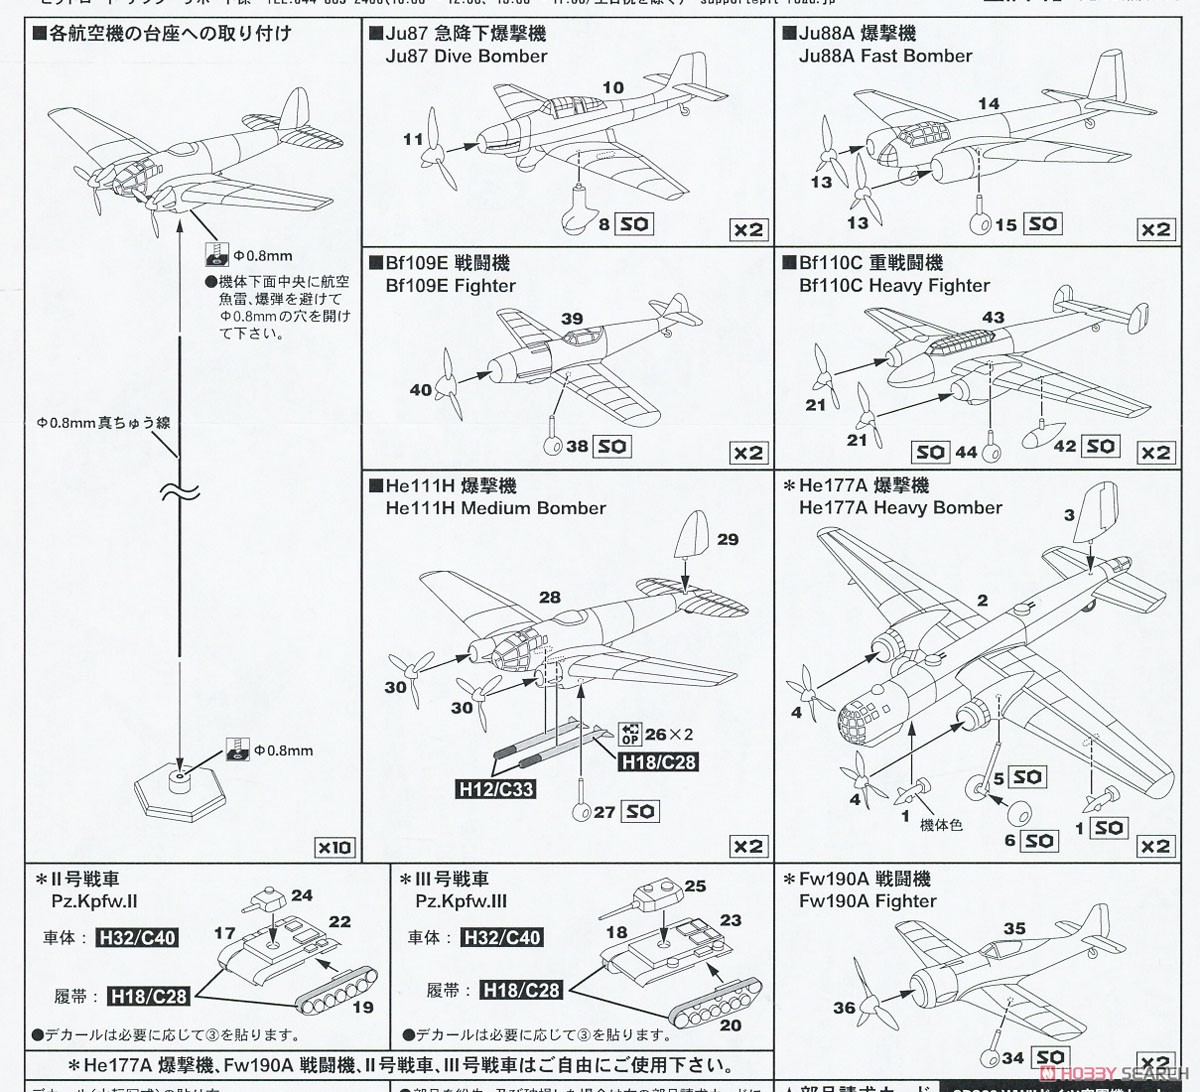 WWII Battle of Britain (RAF vs Luftwaffe) (Plastic model) Assembly guide2